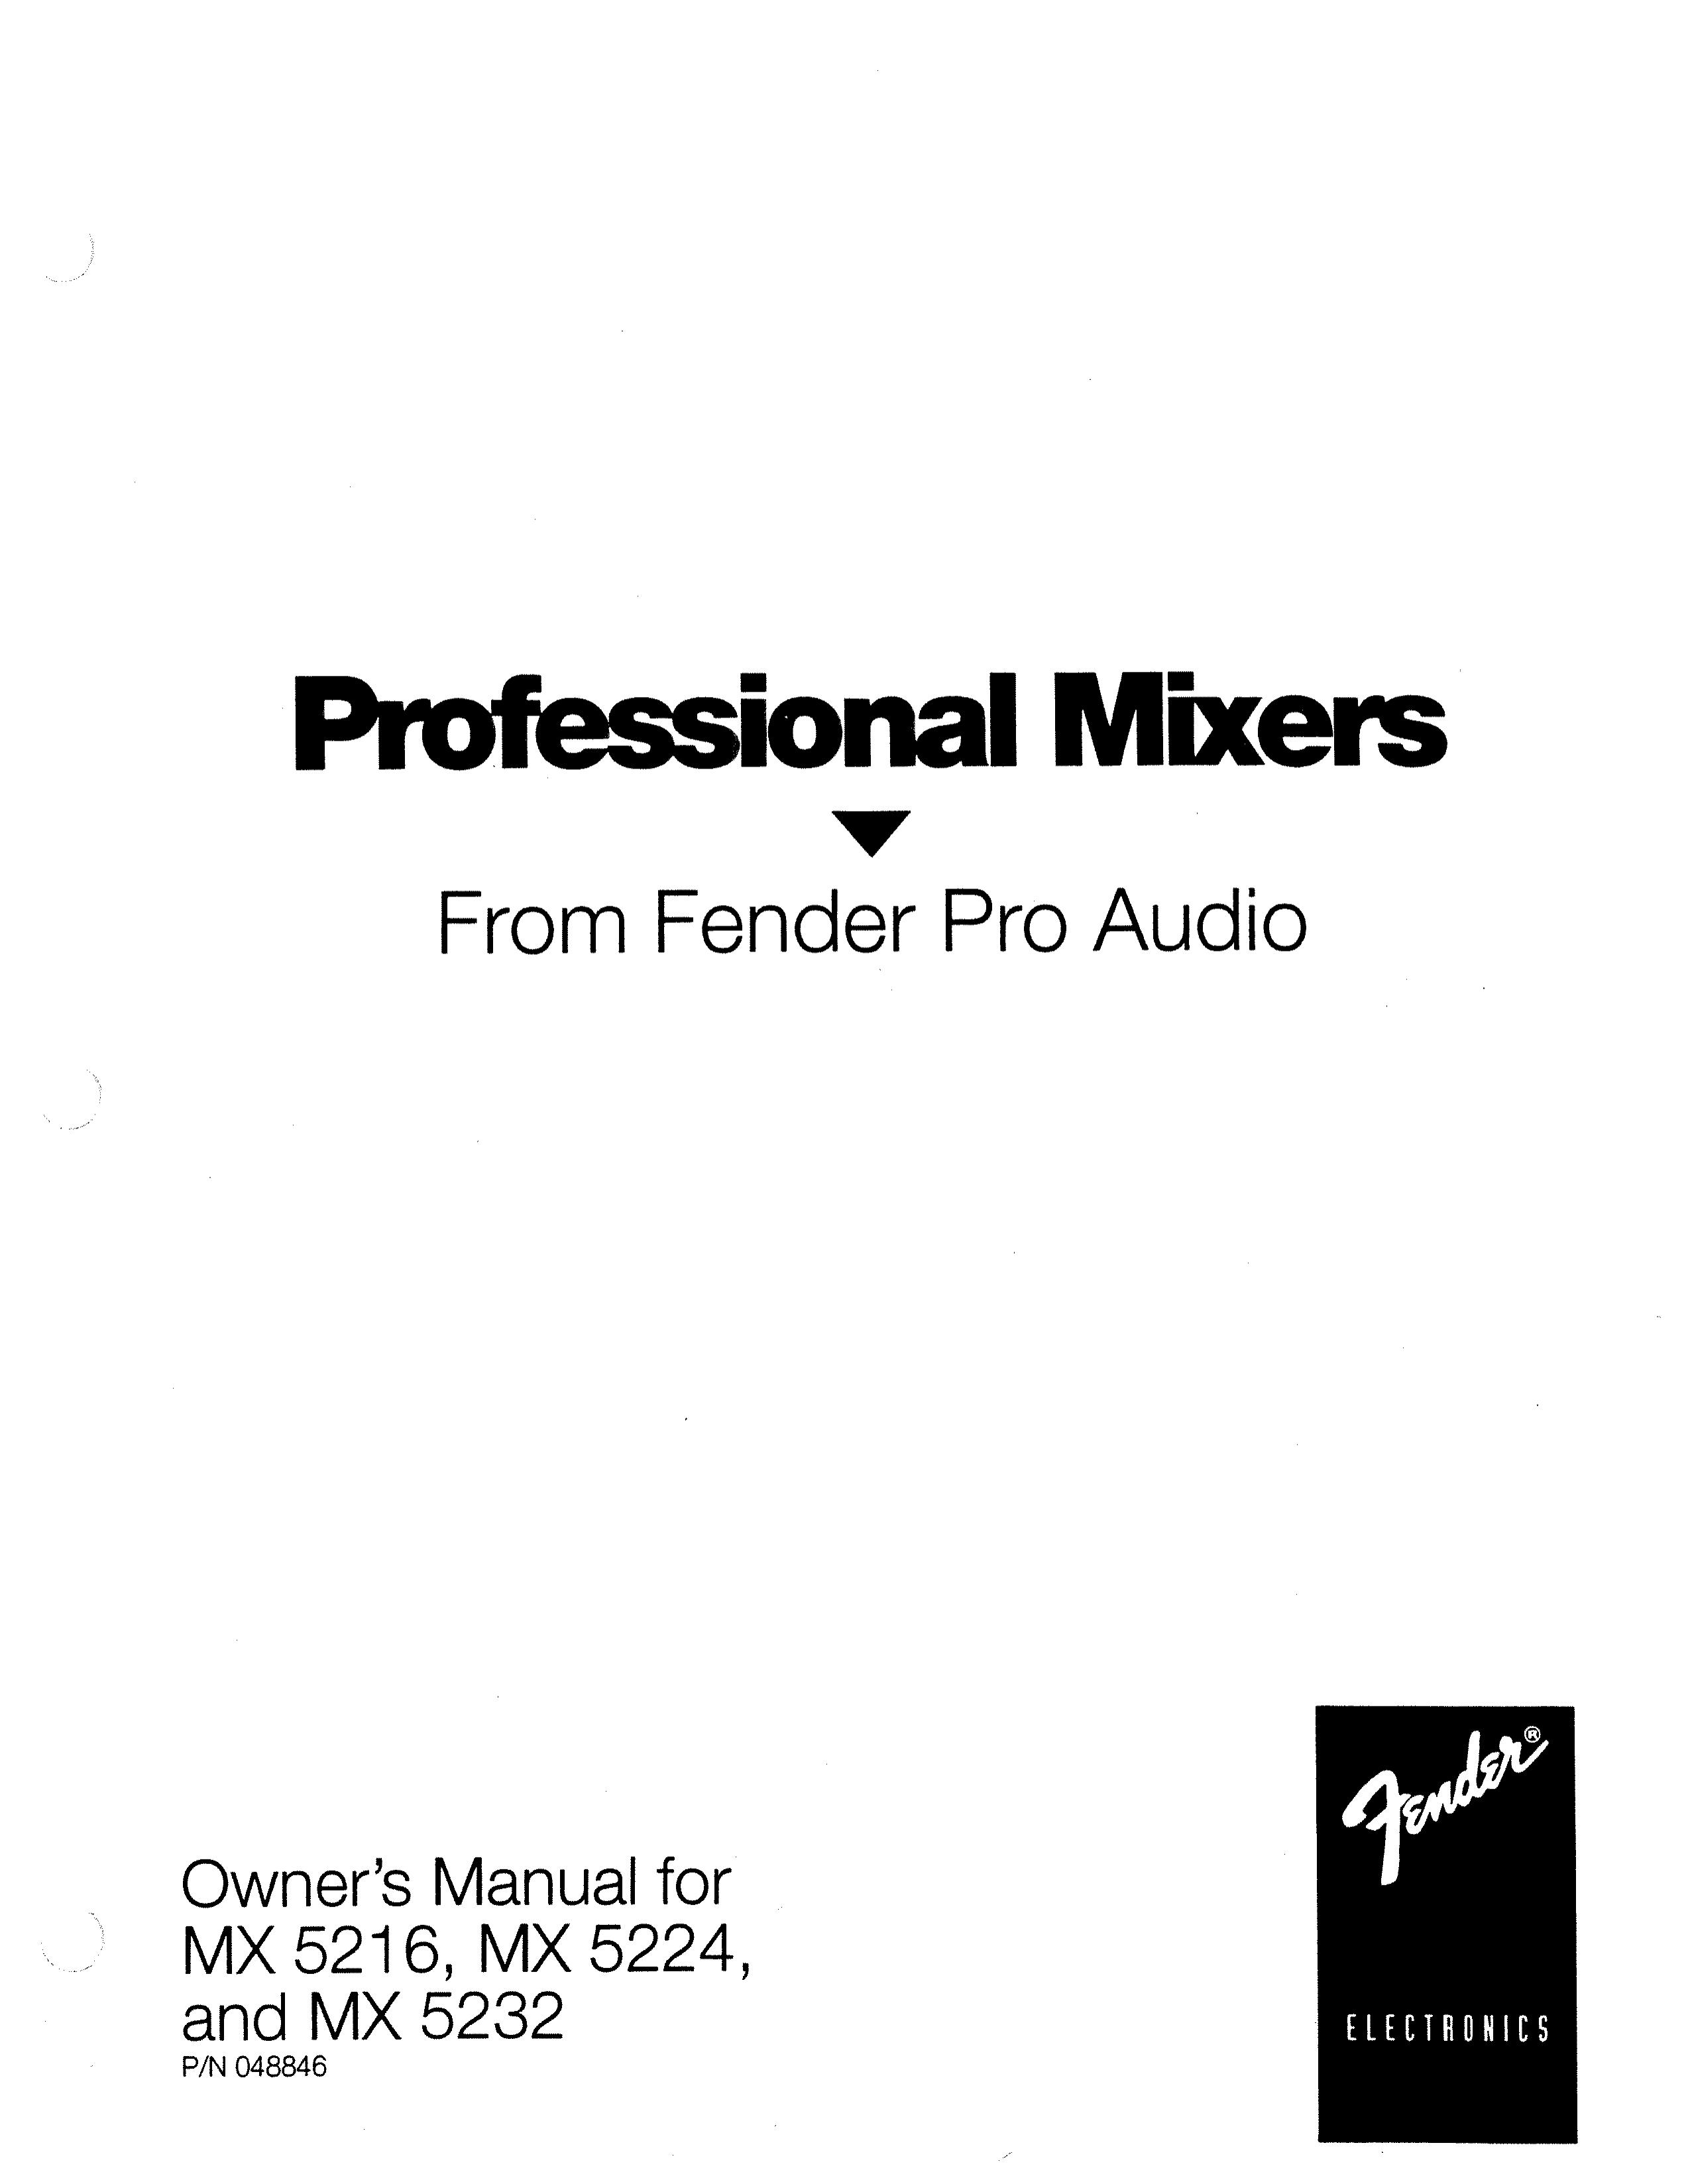 Fender MX 5224 DJ Equipment User Manual